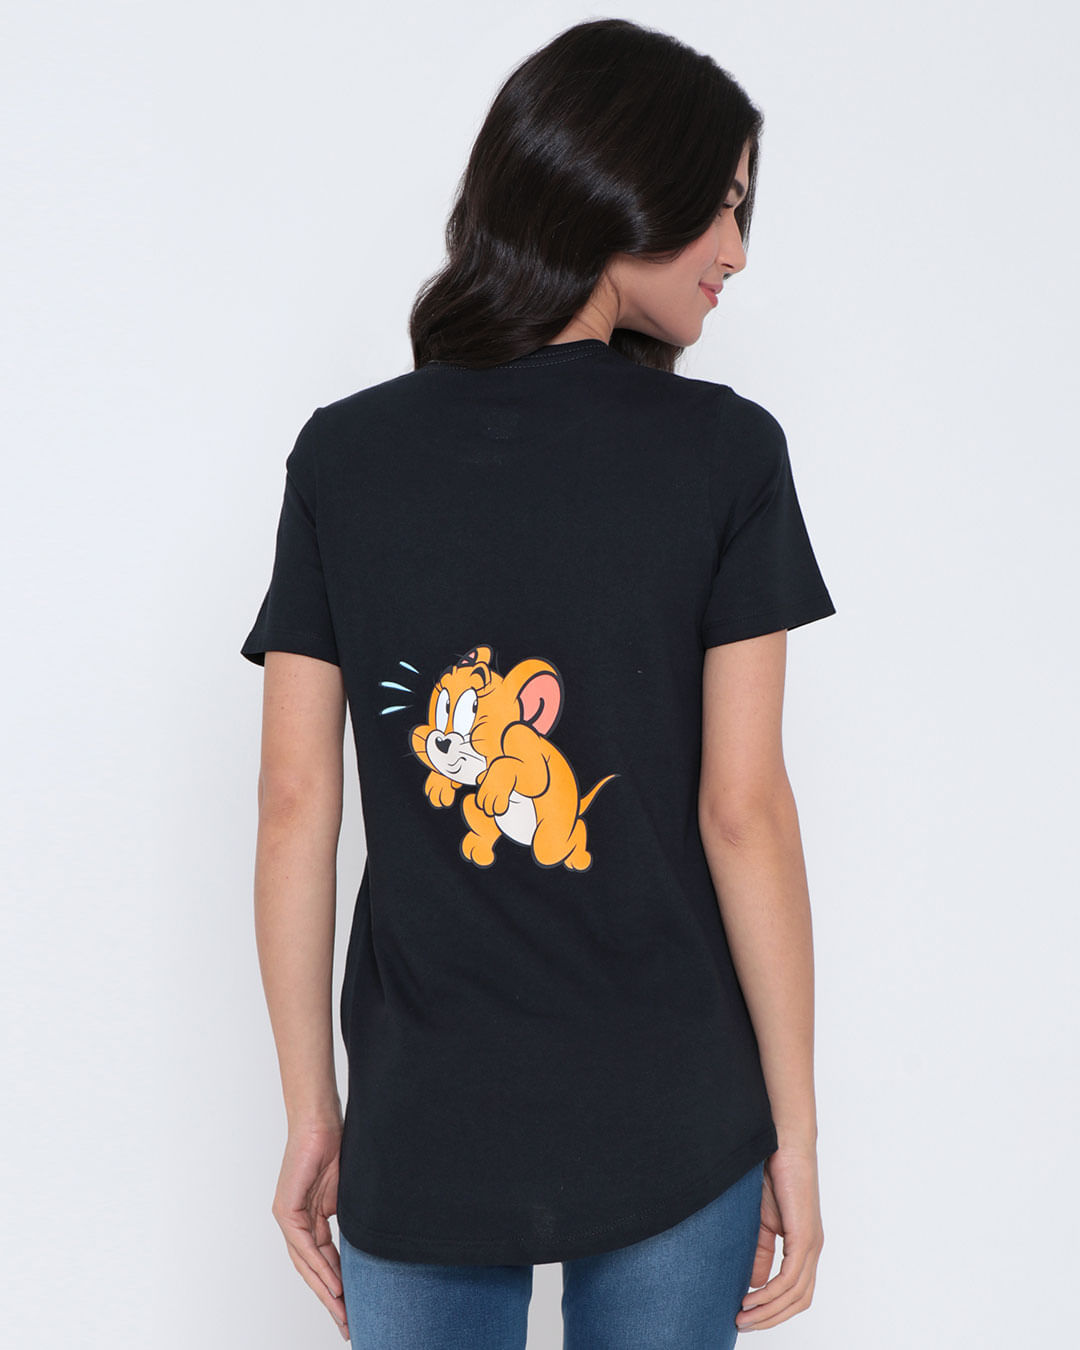 Camiseta-Feminina-Long-Line-Tom-e-Jerry-Warner-Preta